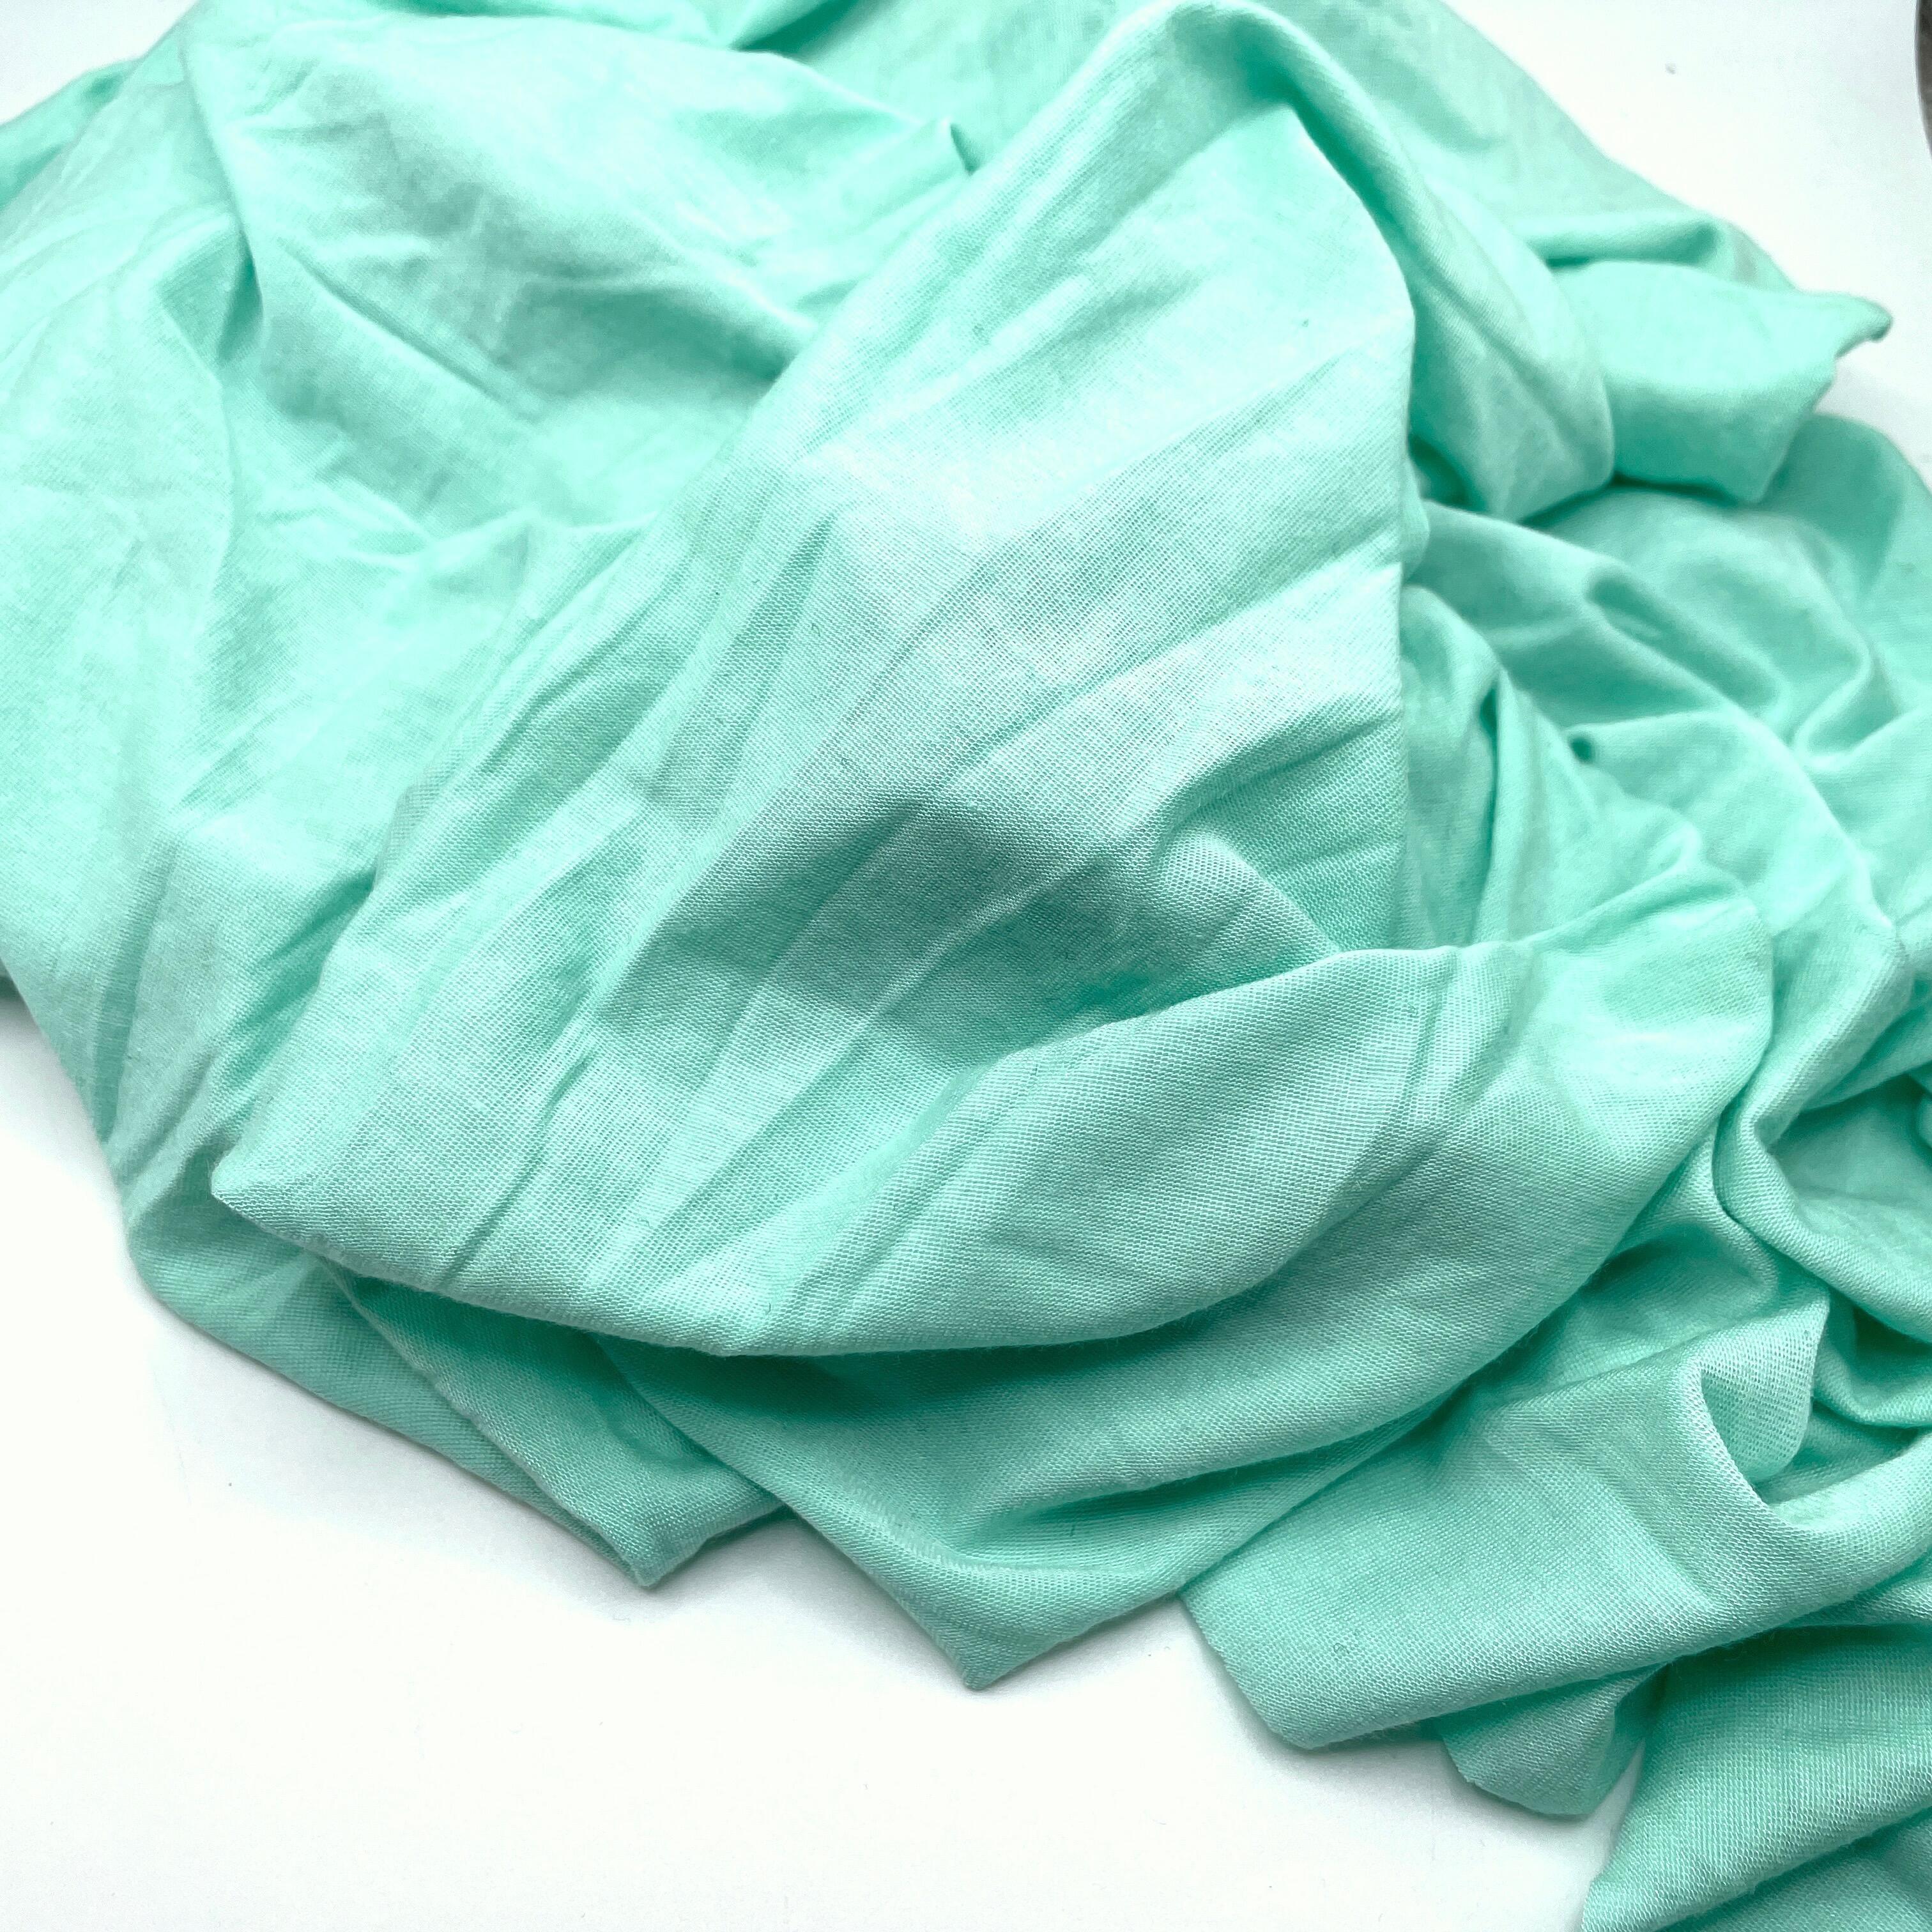 Pastel GREEN (mint) - Stretch Fabric - Knicker/lingerie - Micro